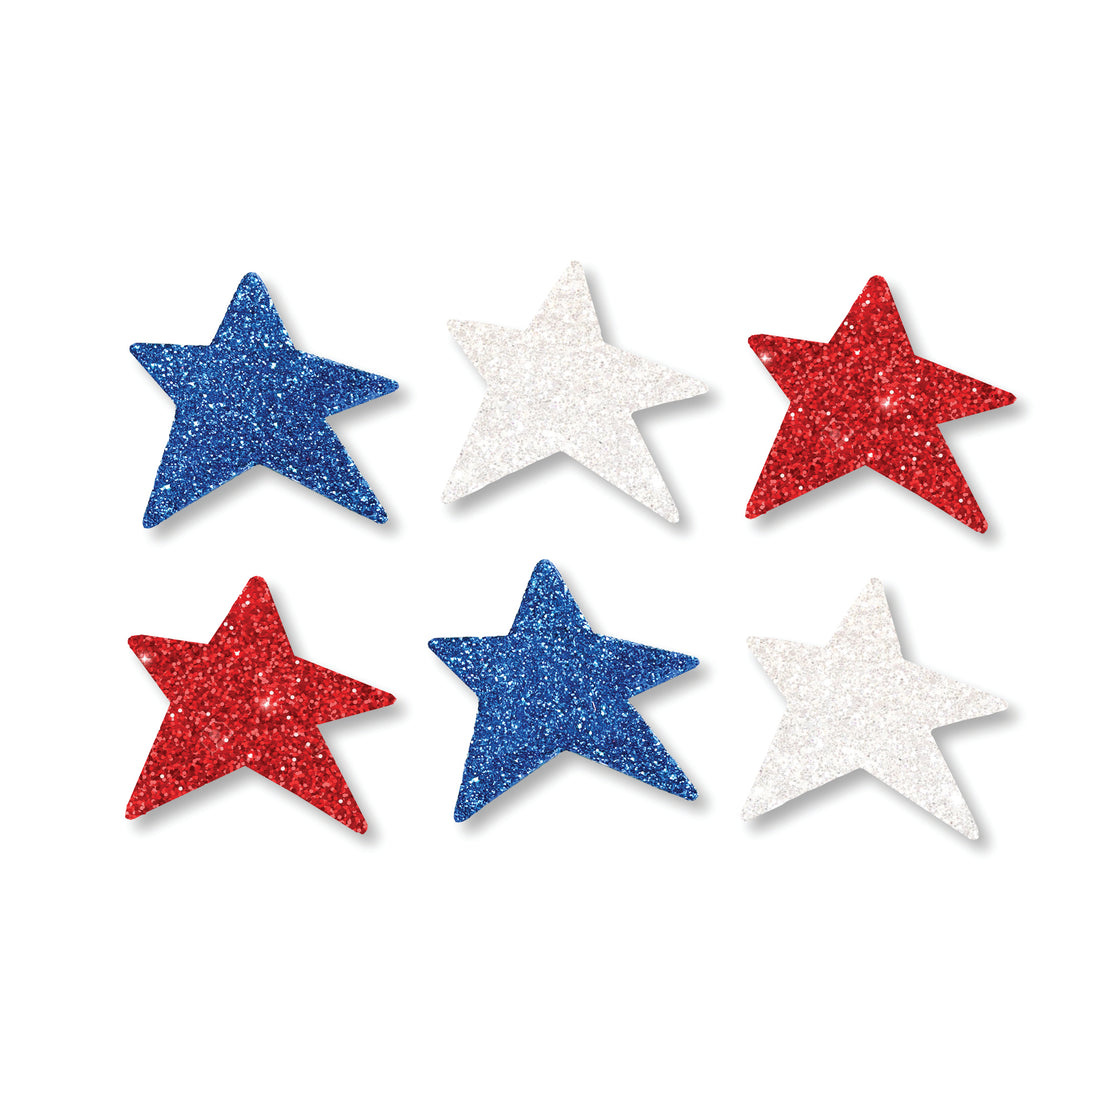 Patriotic Star Magnets S/6 Glittered